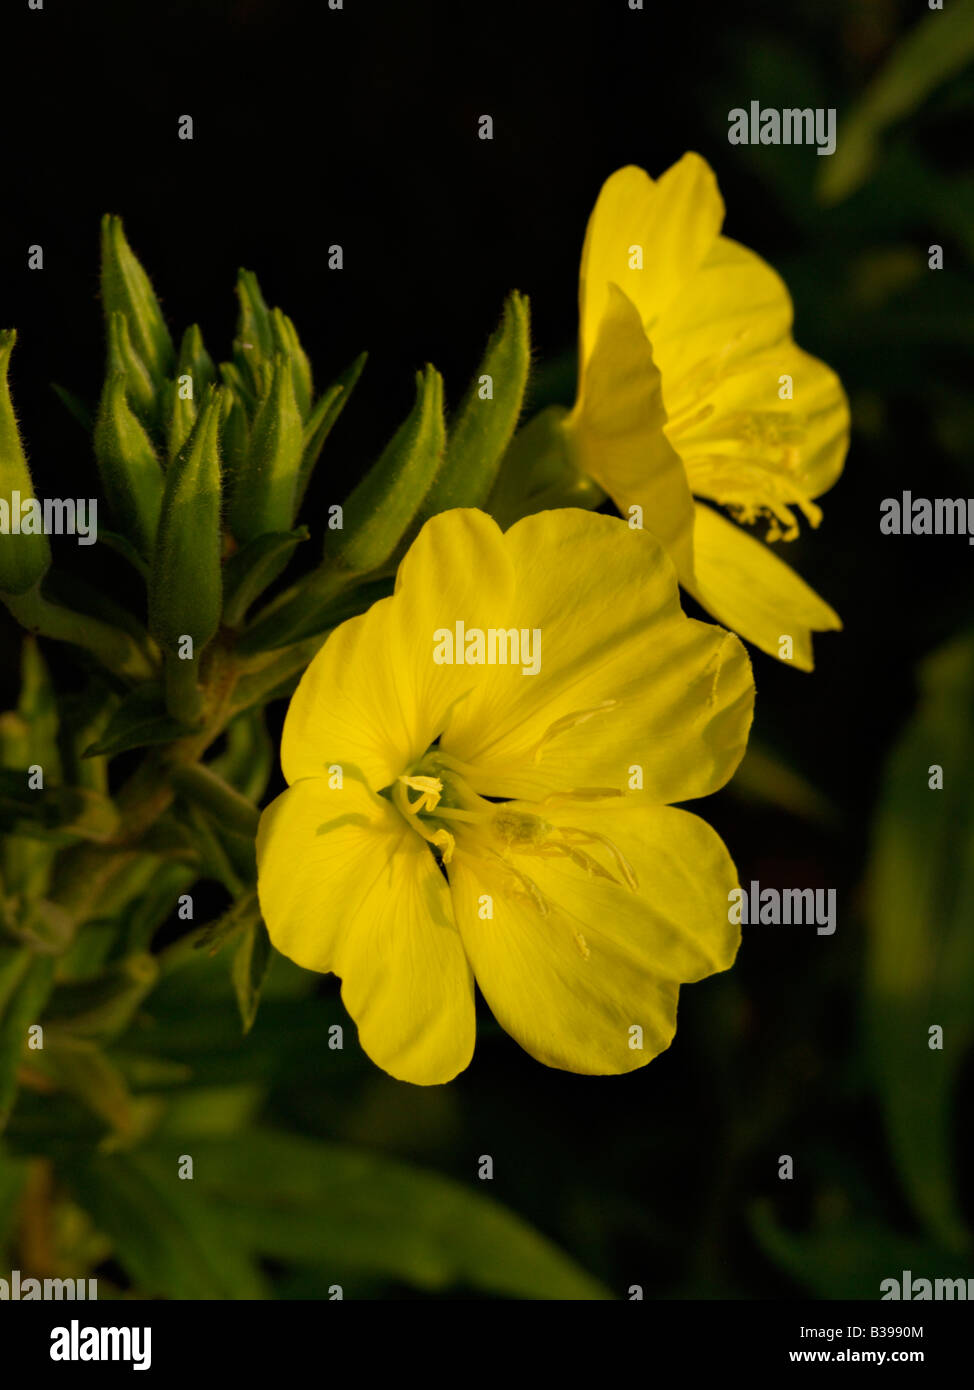 Common evening primrose (Oenothera biennis) Stock Photo